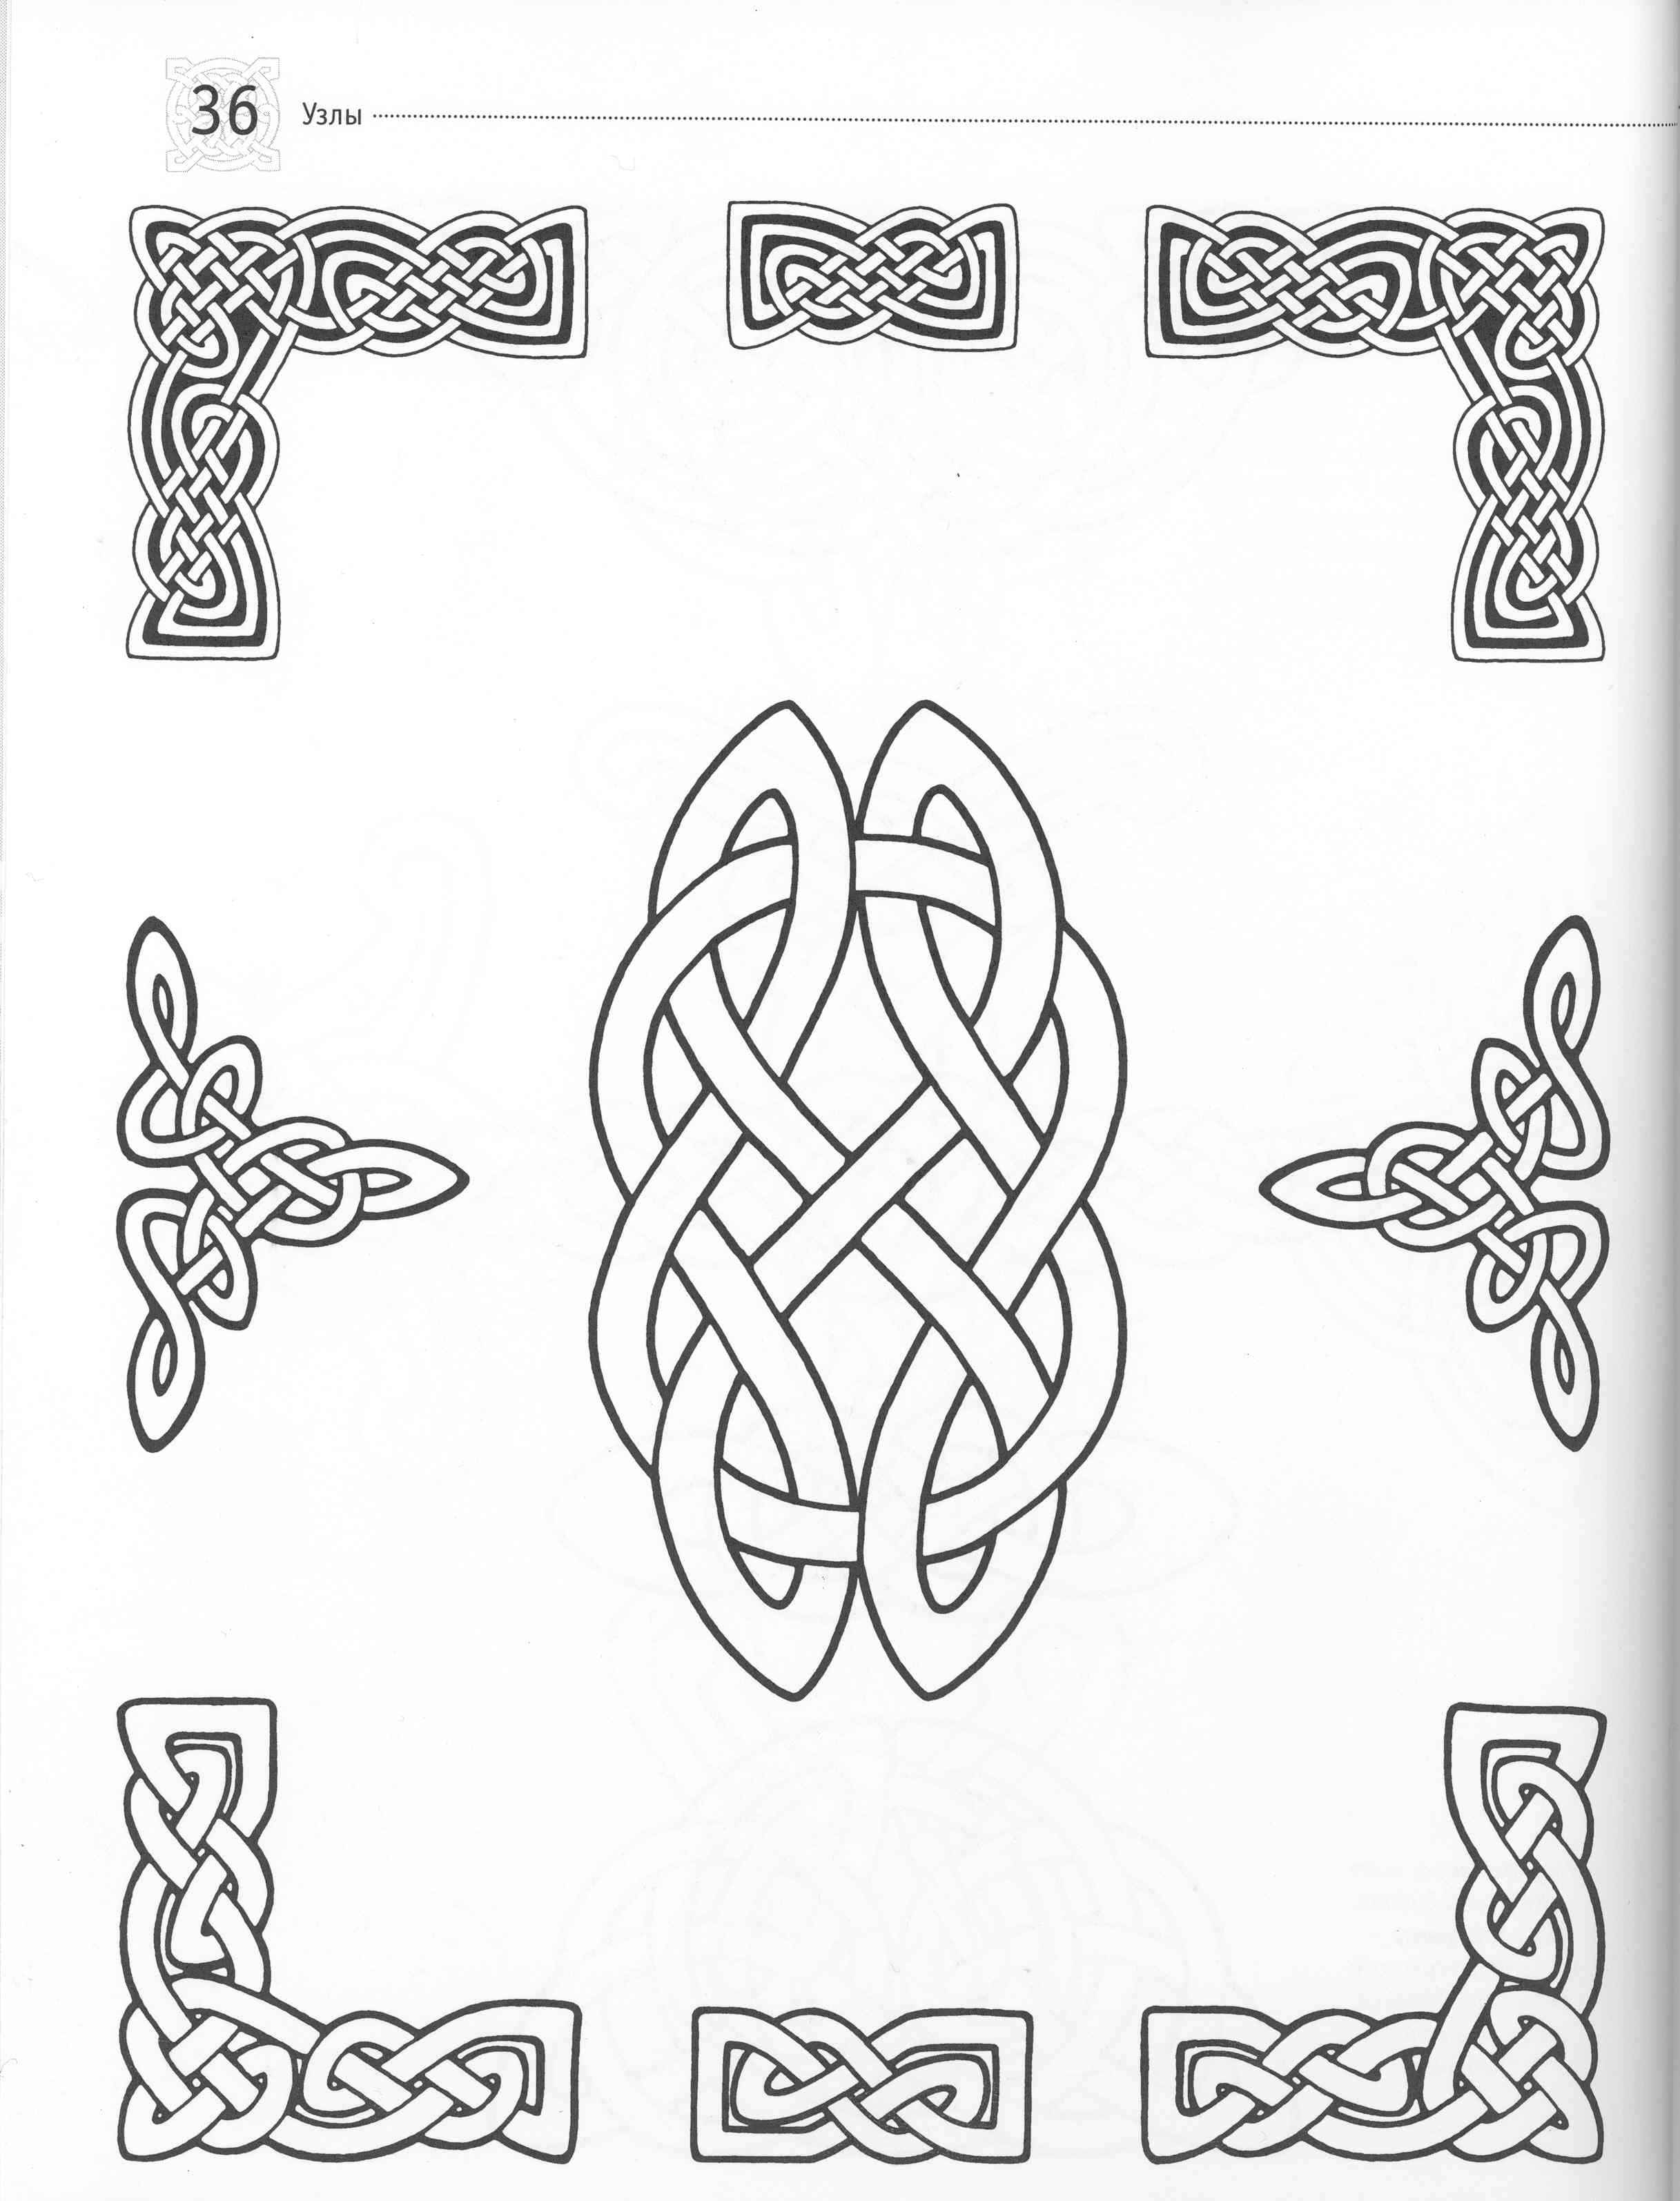 славянский узор (орнамент)